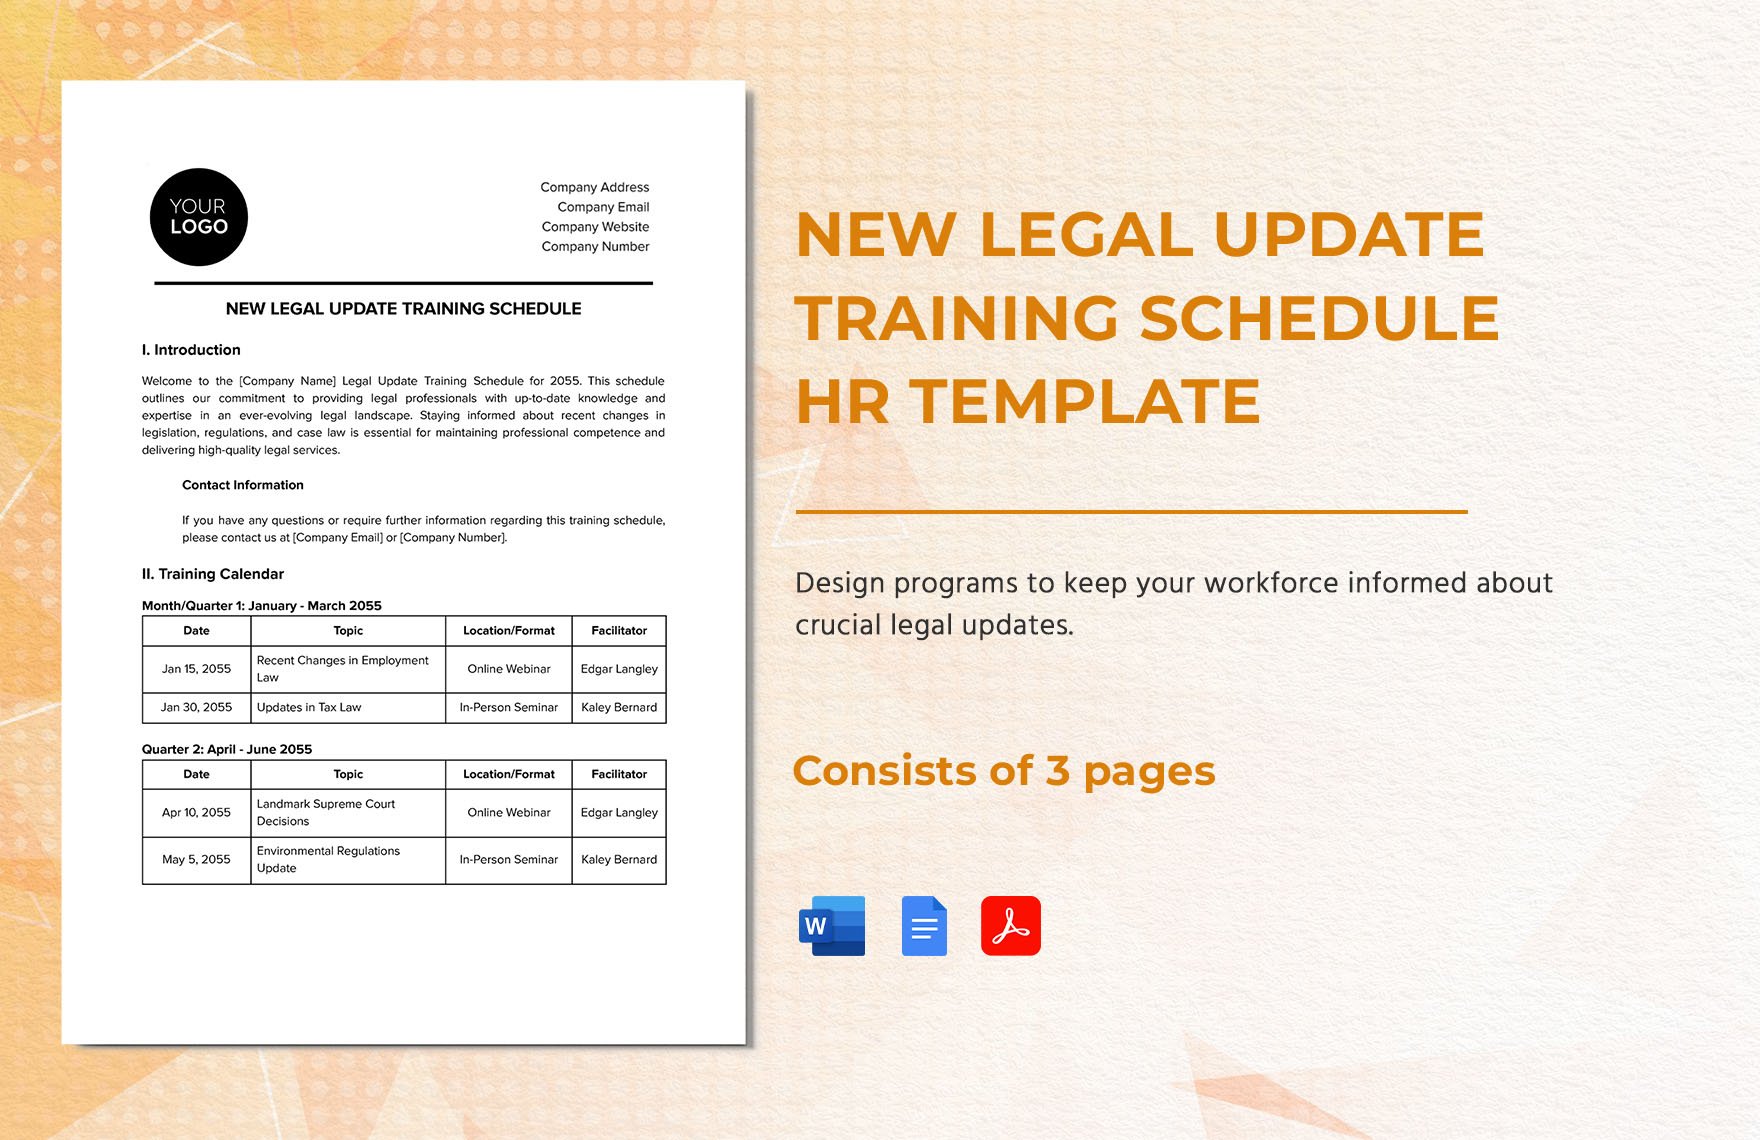 New Legal Update Training Schedule HR Template in Word, Google Docs, PDF